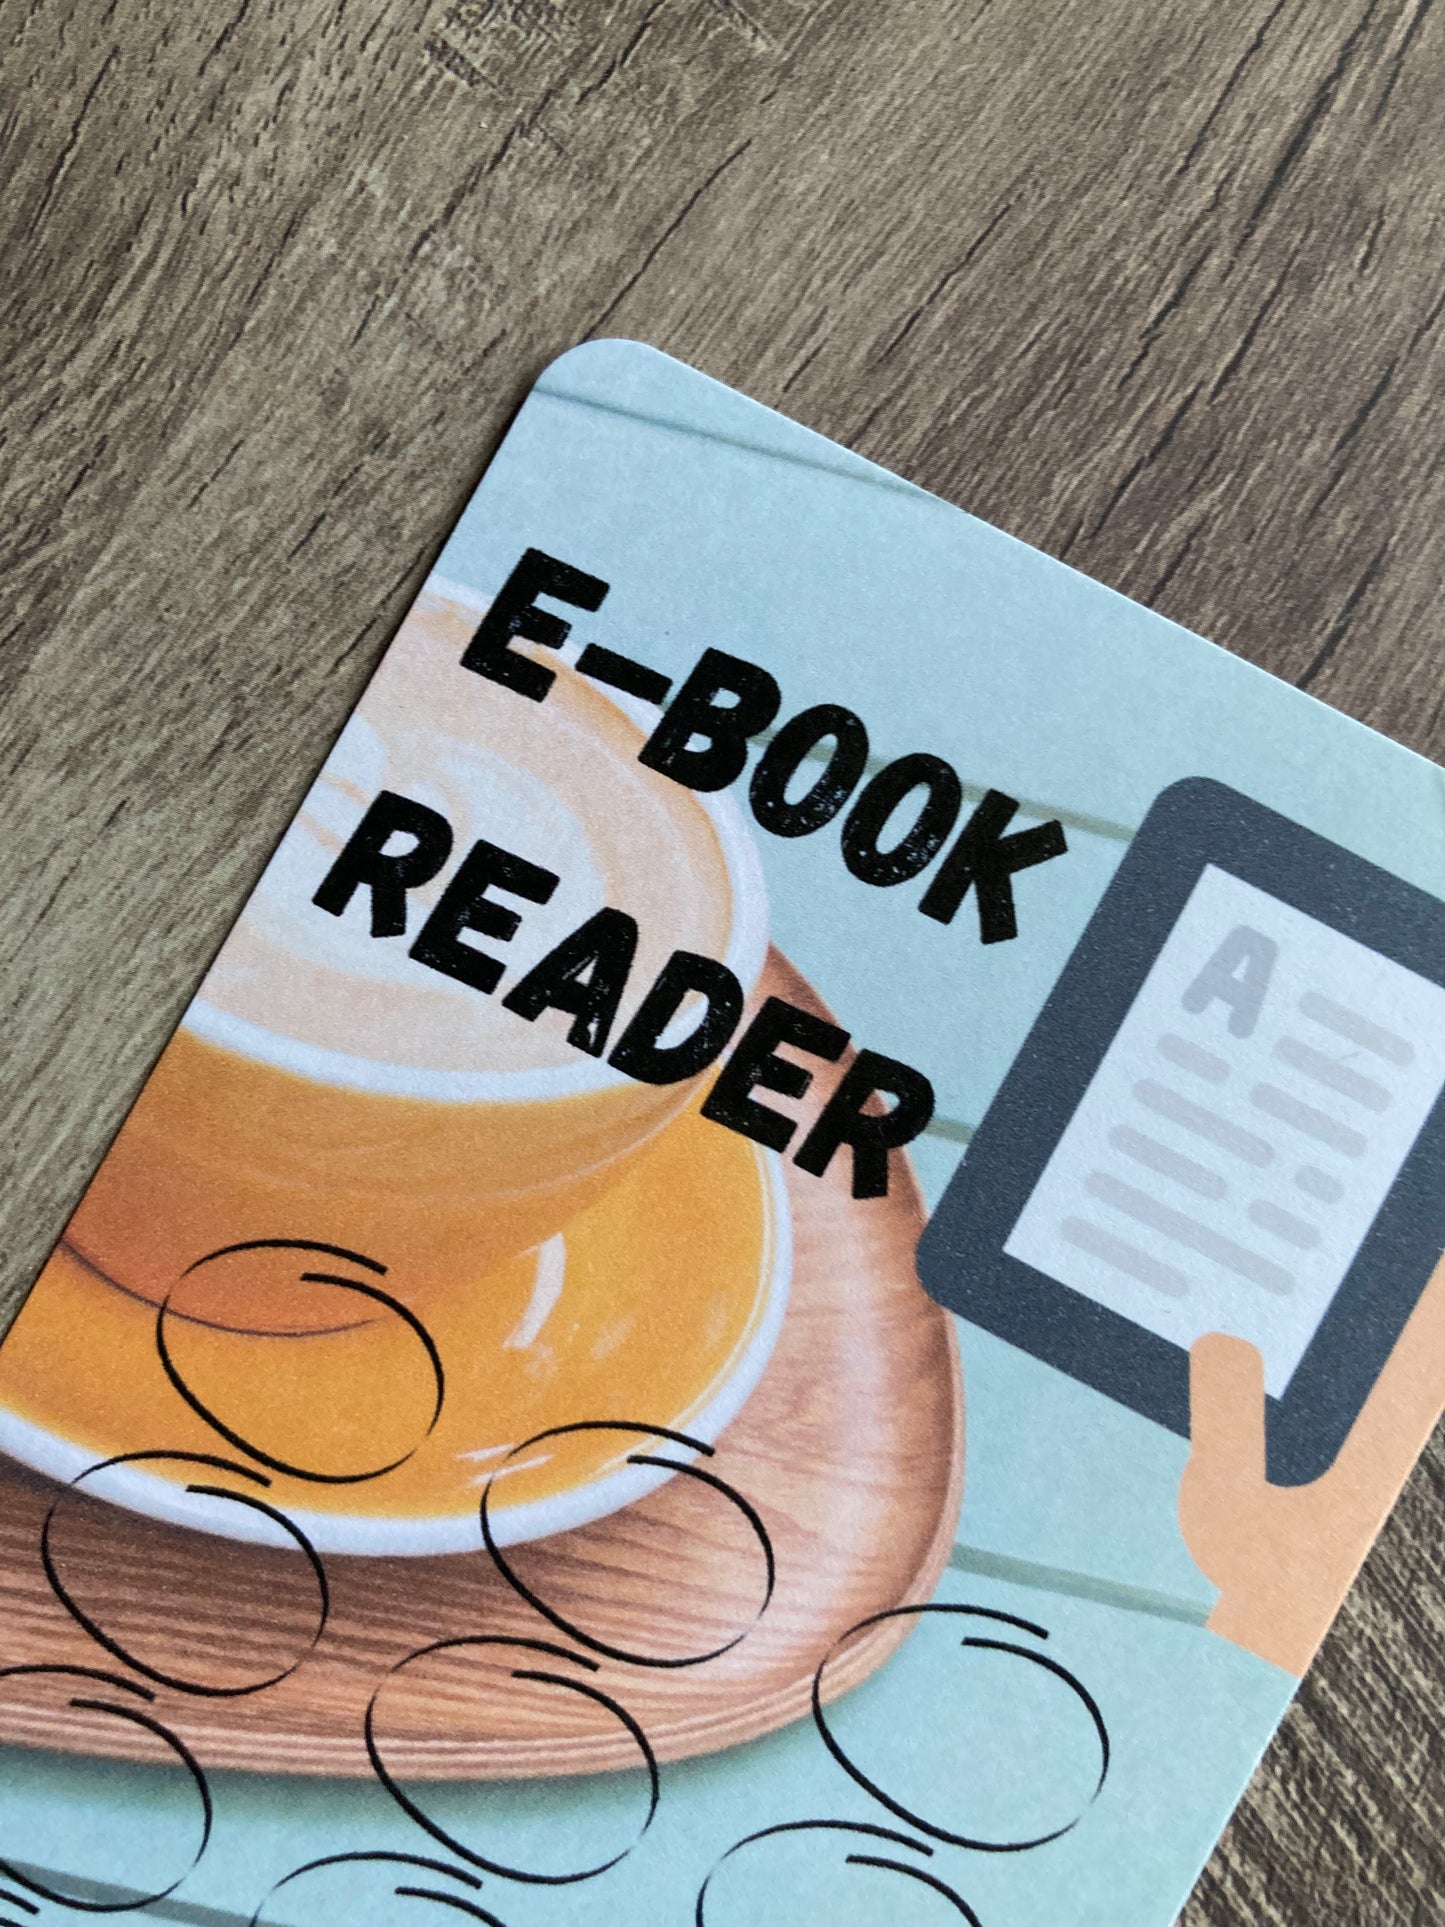 Saving challenge “e-book reader”